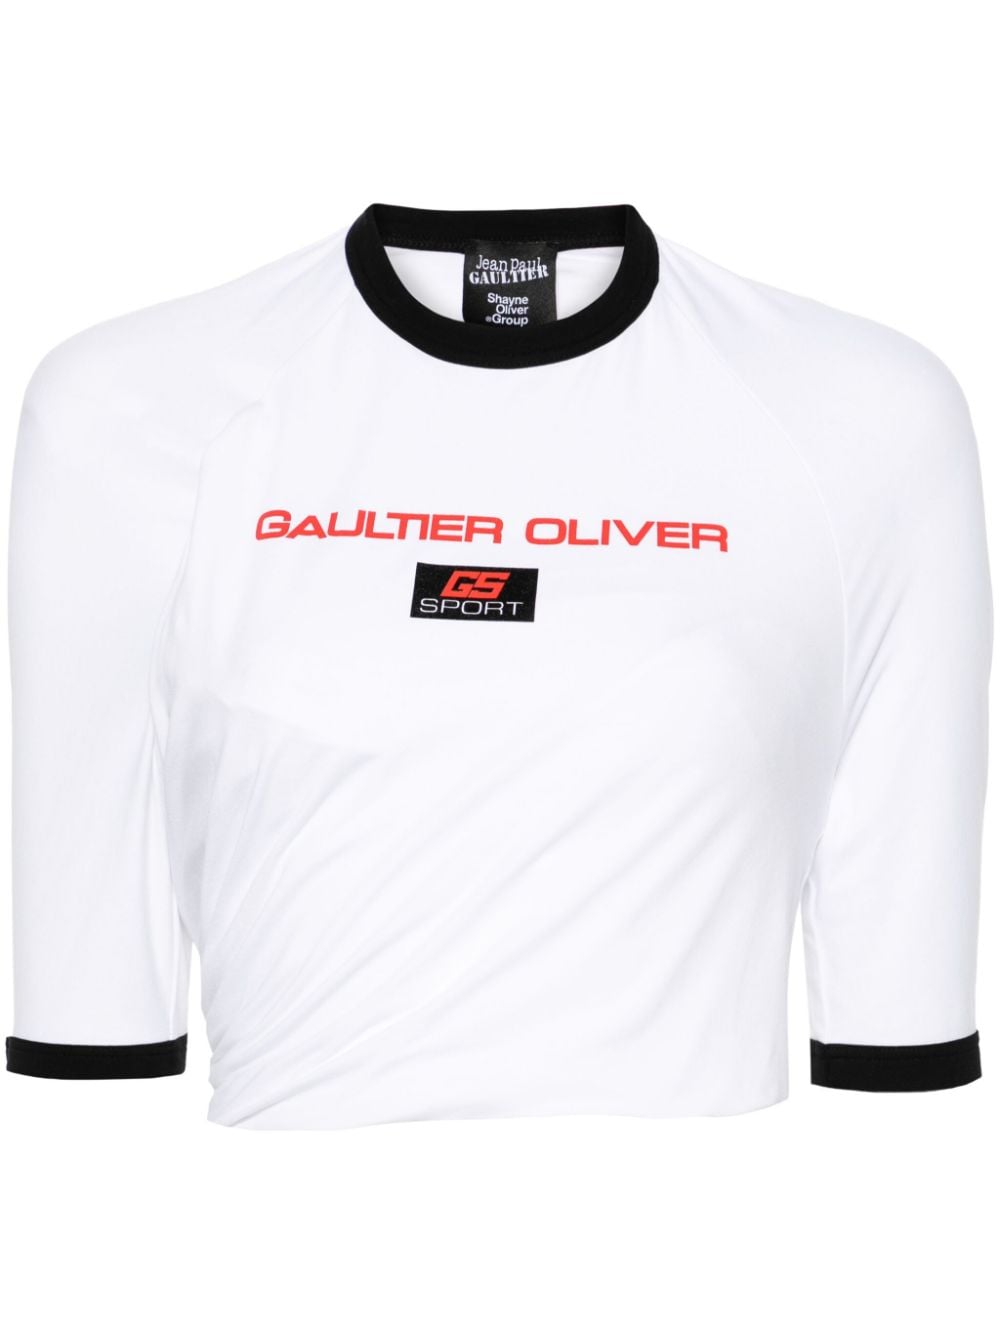 Jean Paul Gaultier x Shayne Oliver folded-style T-shirt - White von Jean Paul Gaultier